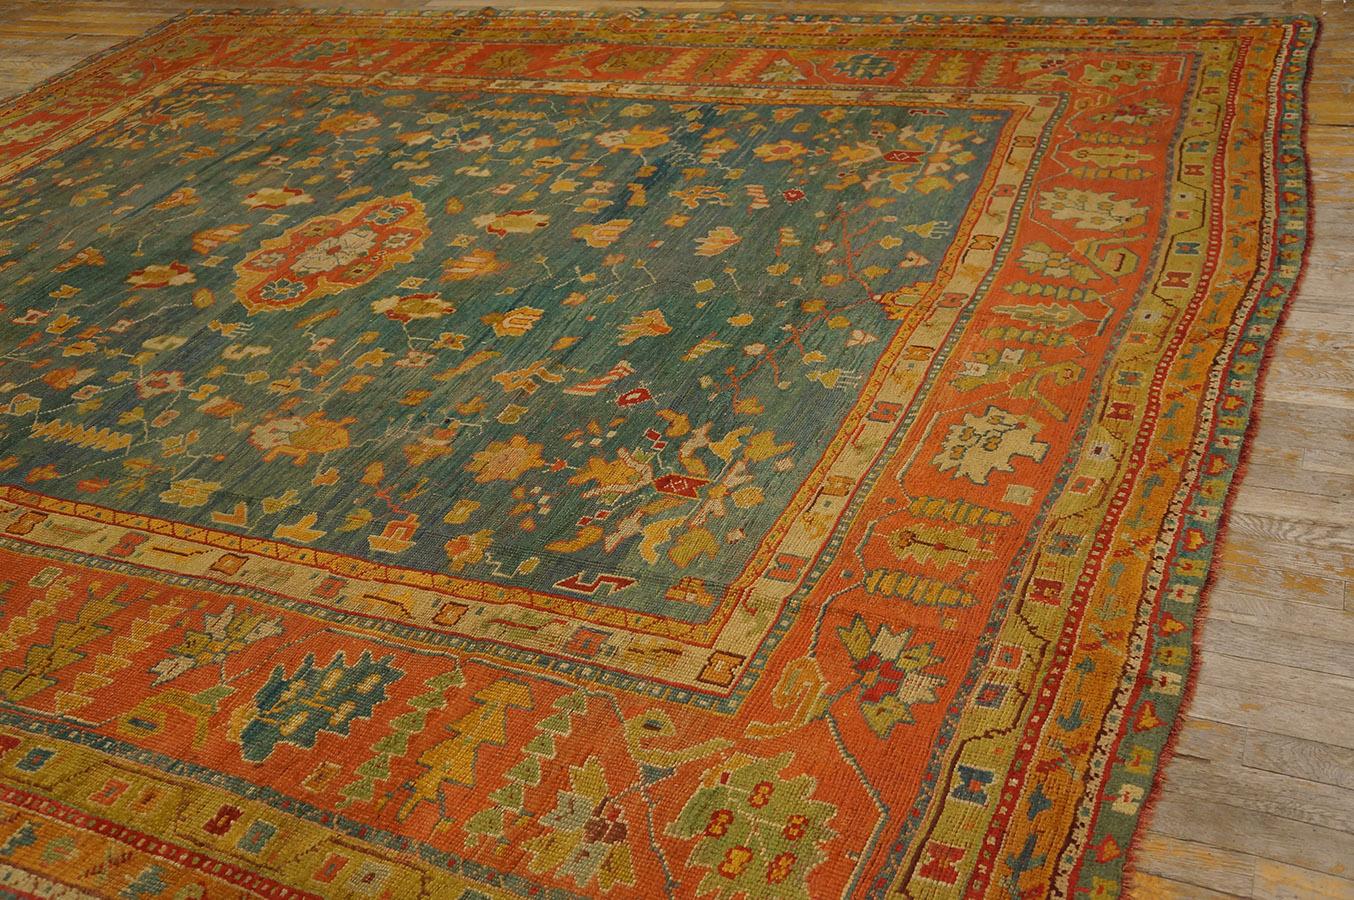 Late 19th Century 19th Century Turkish Oushak Carpet ( 10'5'' x 11'10'' - 317 x 360 cm )  For Sale